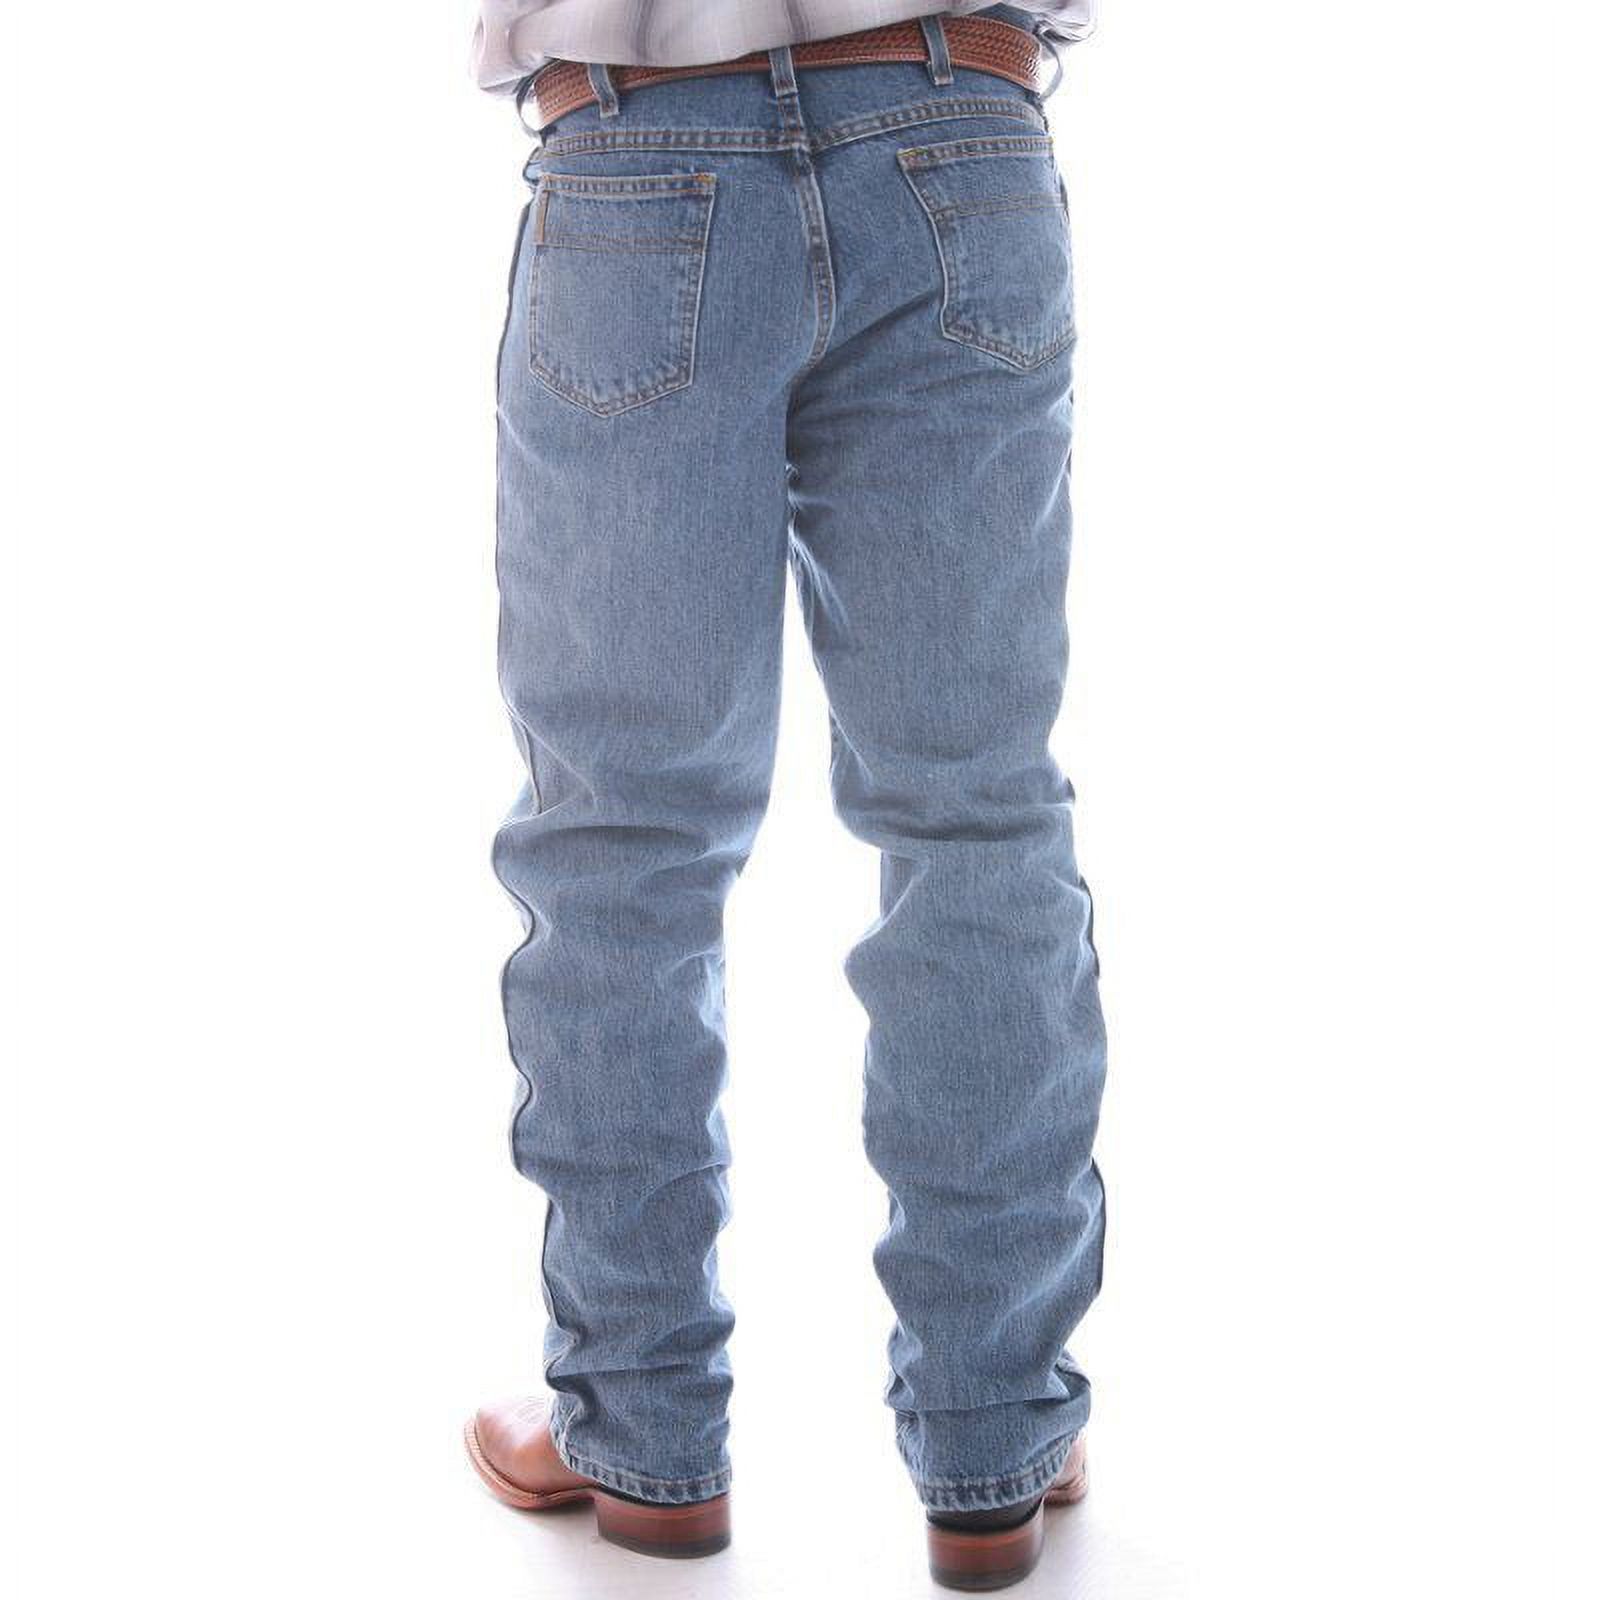 Cinch Men's Jeans  Original Fit Green Label Midstone 33W x 38L  US - image 1 of 4